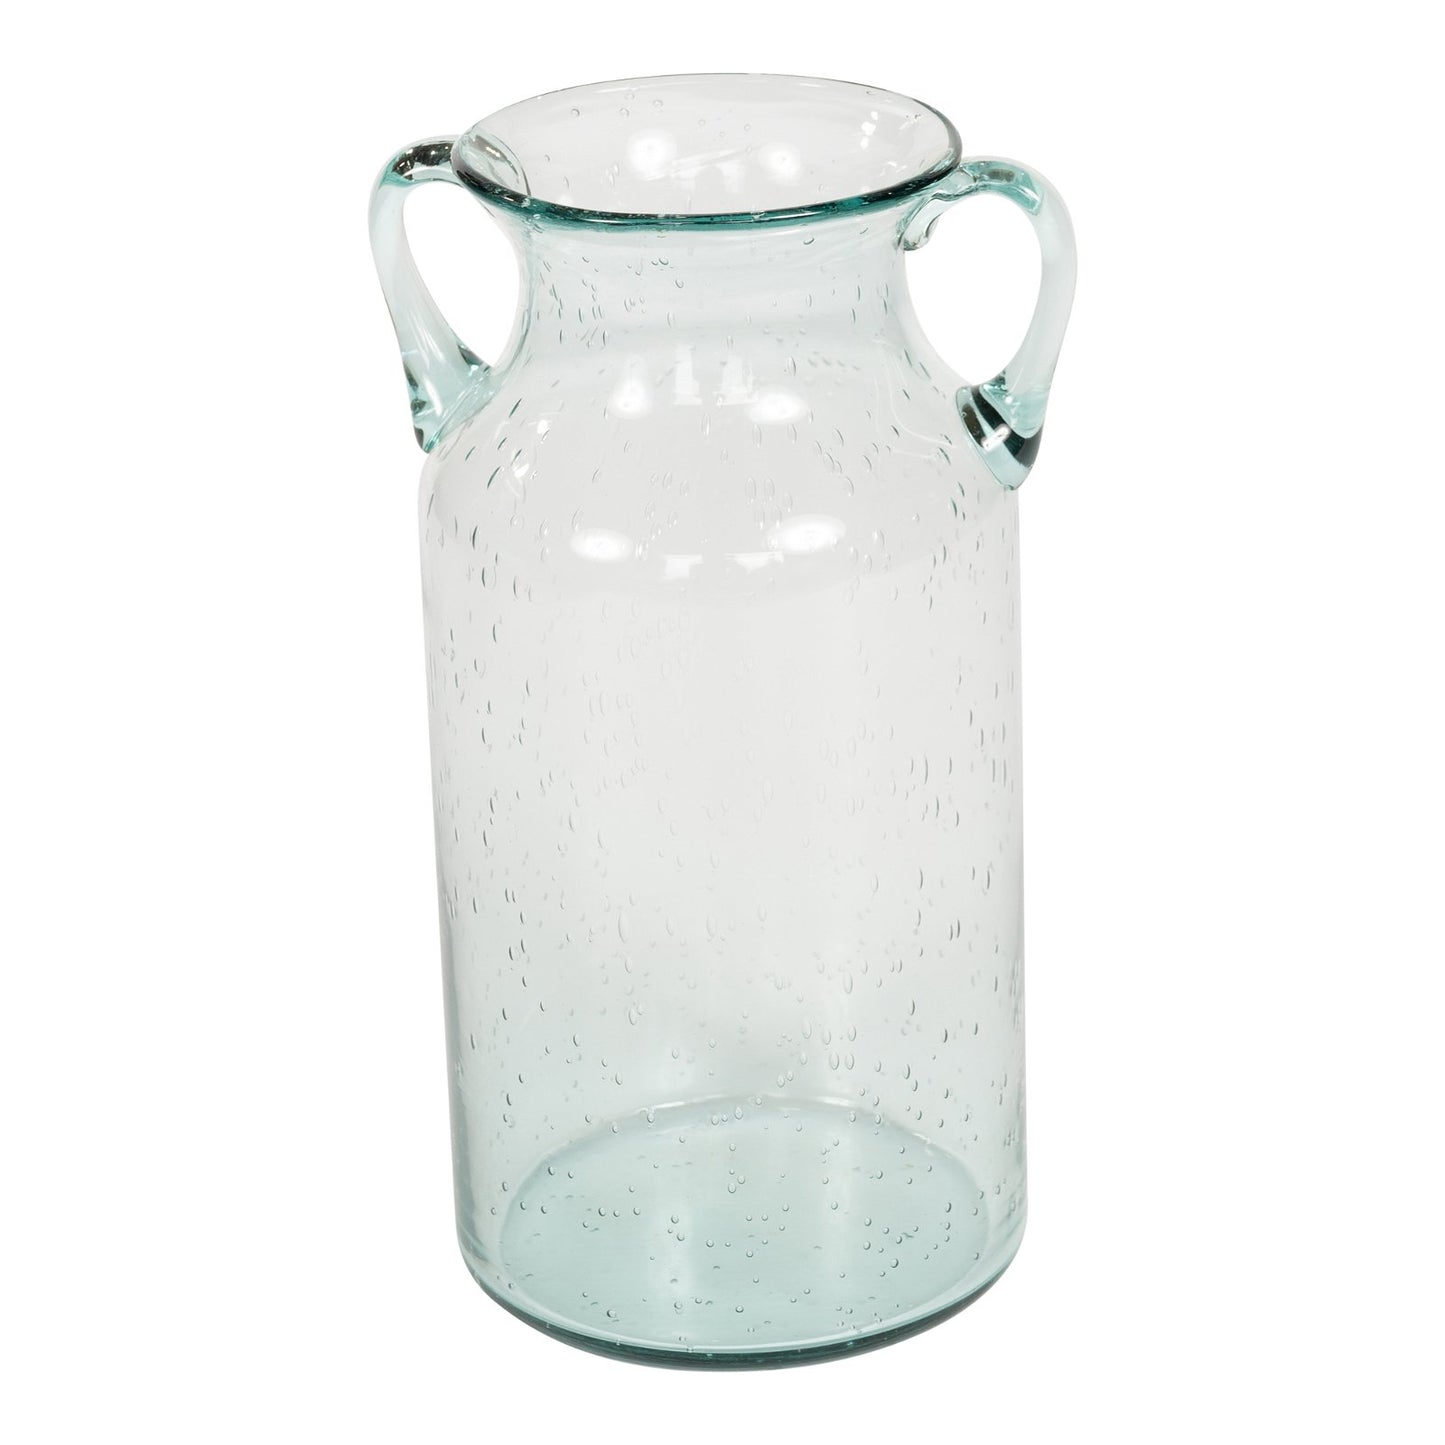 Glass Flower Vase with Handles Daisy Bubble Design 25cm